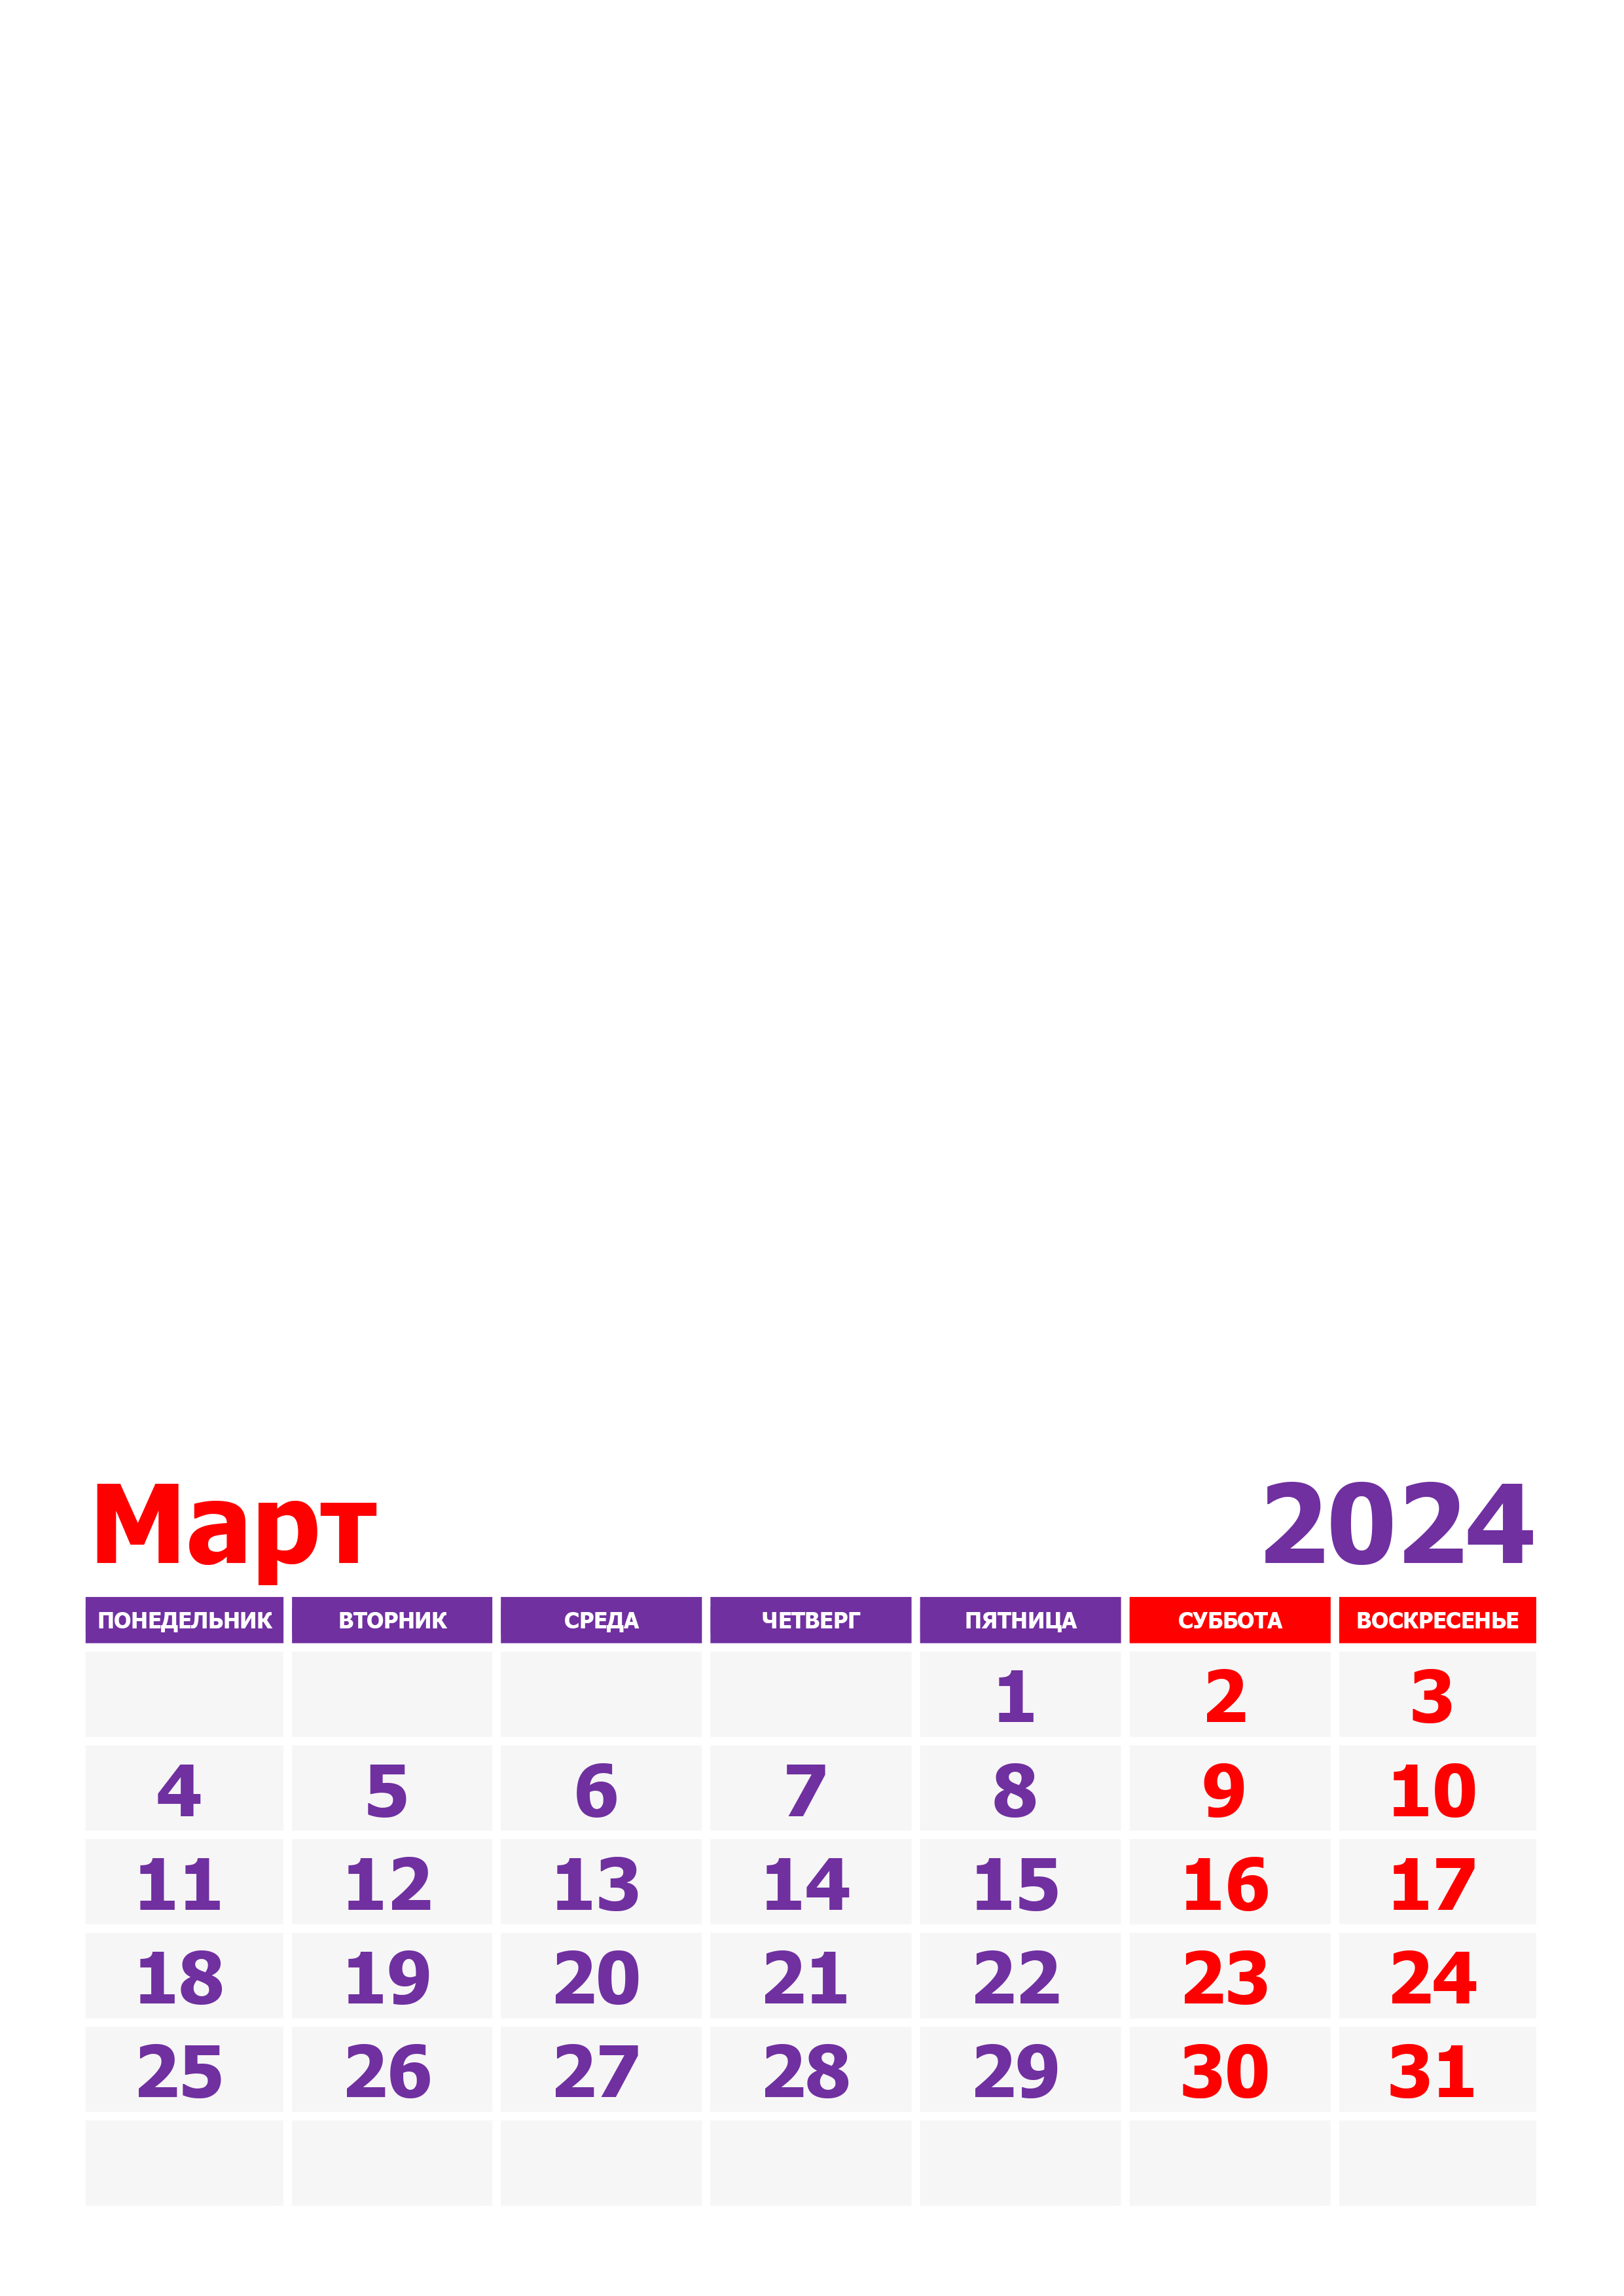 Выходные дни в марте 2024 г. Календарь март 2024. Календарь на март 2024 года. Rfktylfhm YF vdhnn 2024. Календарб Марти 2024.